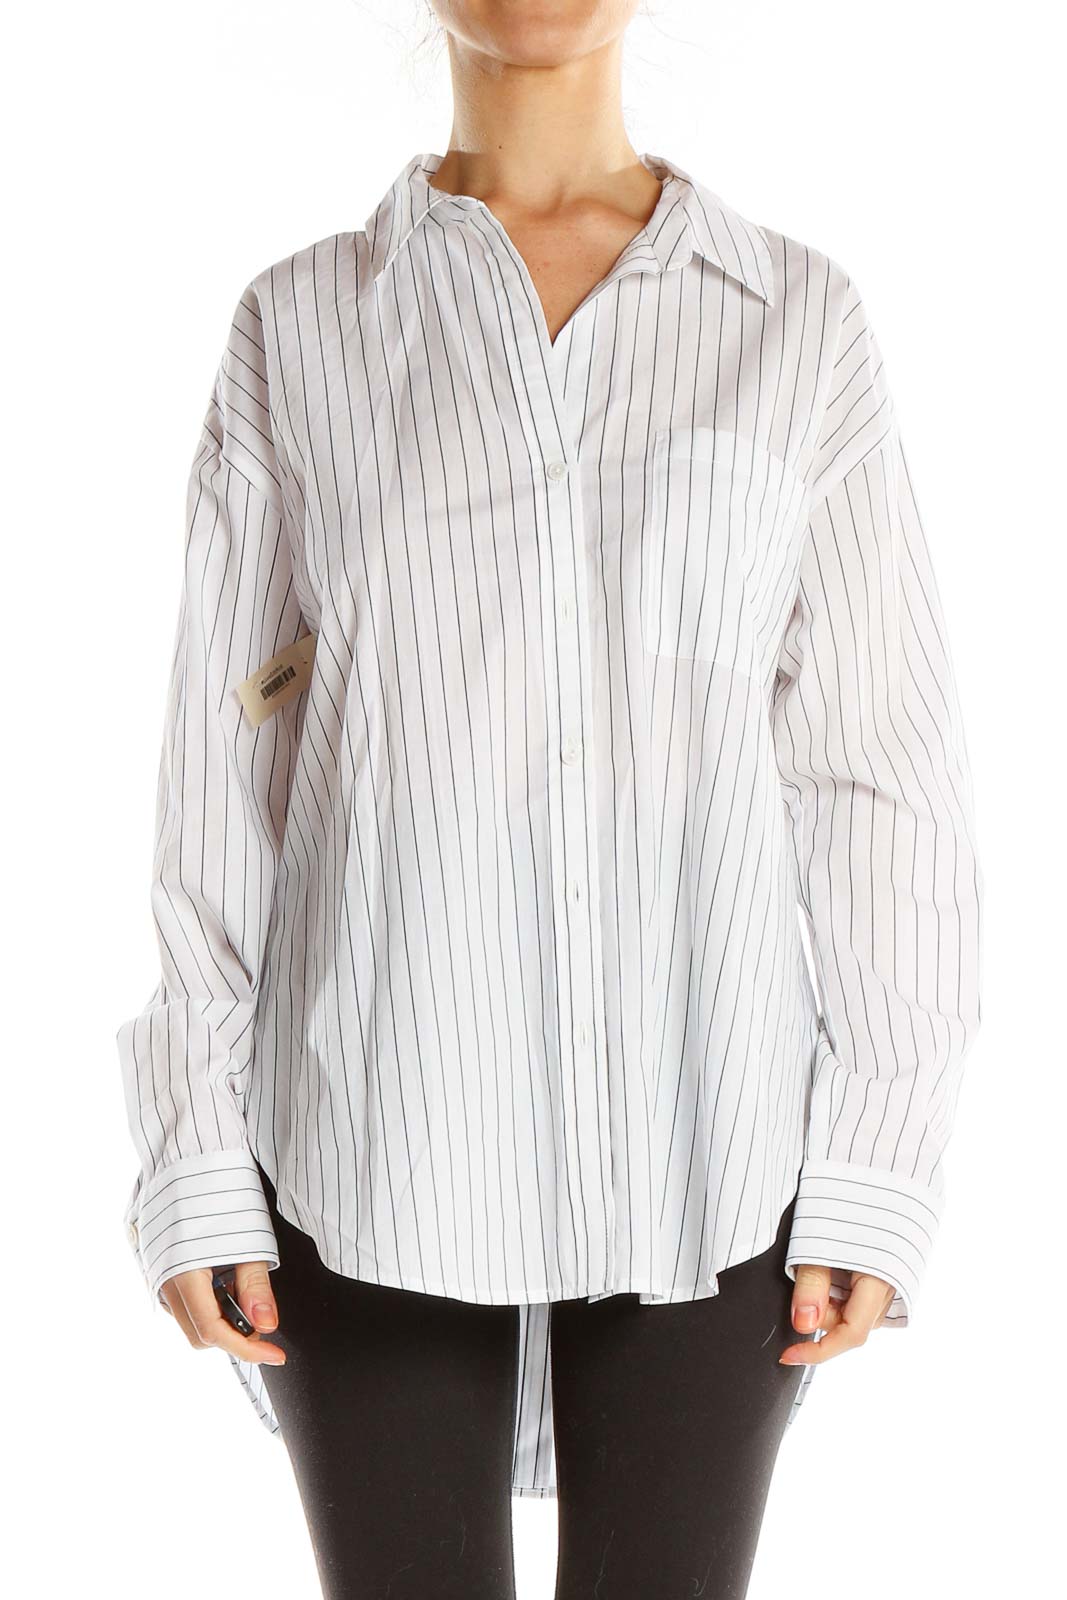 White Pinstripe Classic Shirt Front